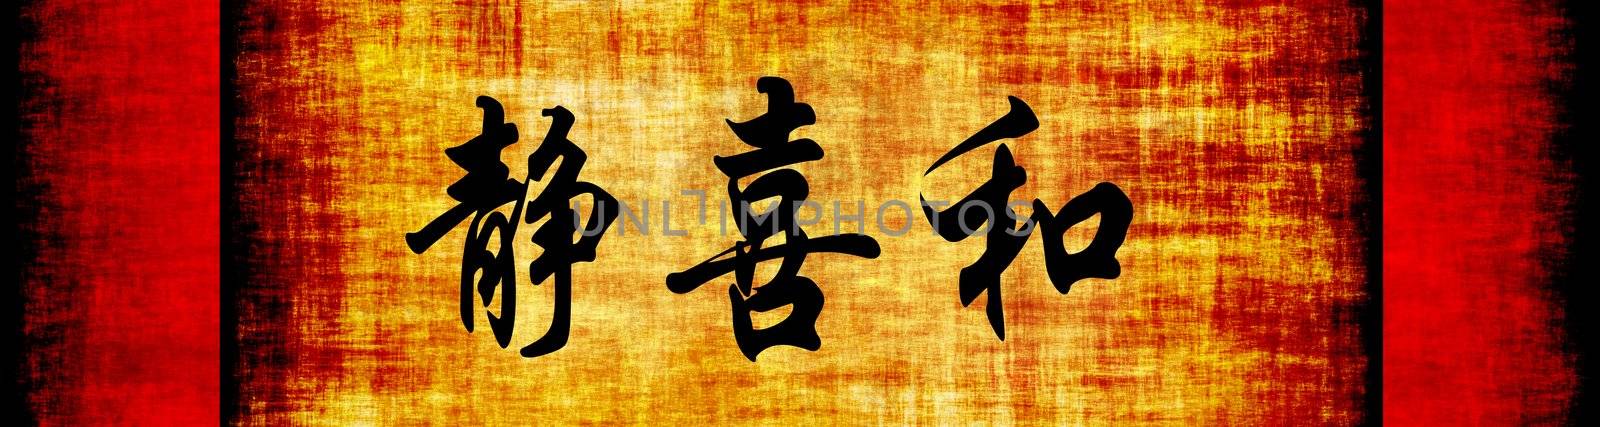 Serenity Happiness Harmony Chinese Motivational Phrase by kentoh